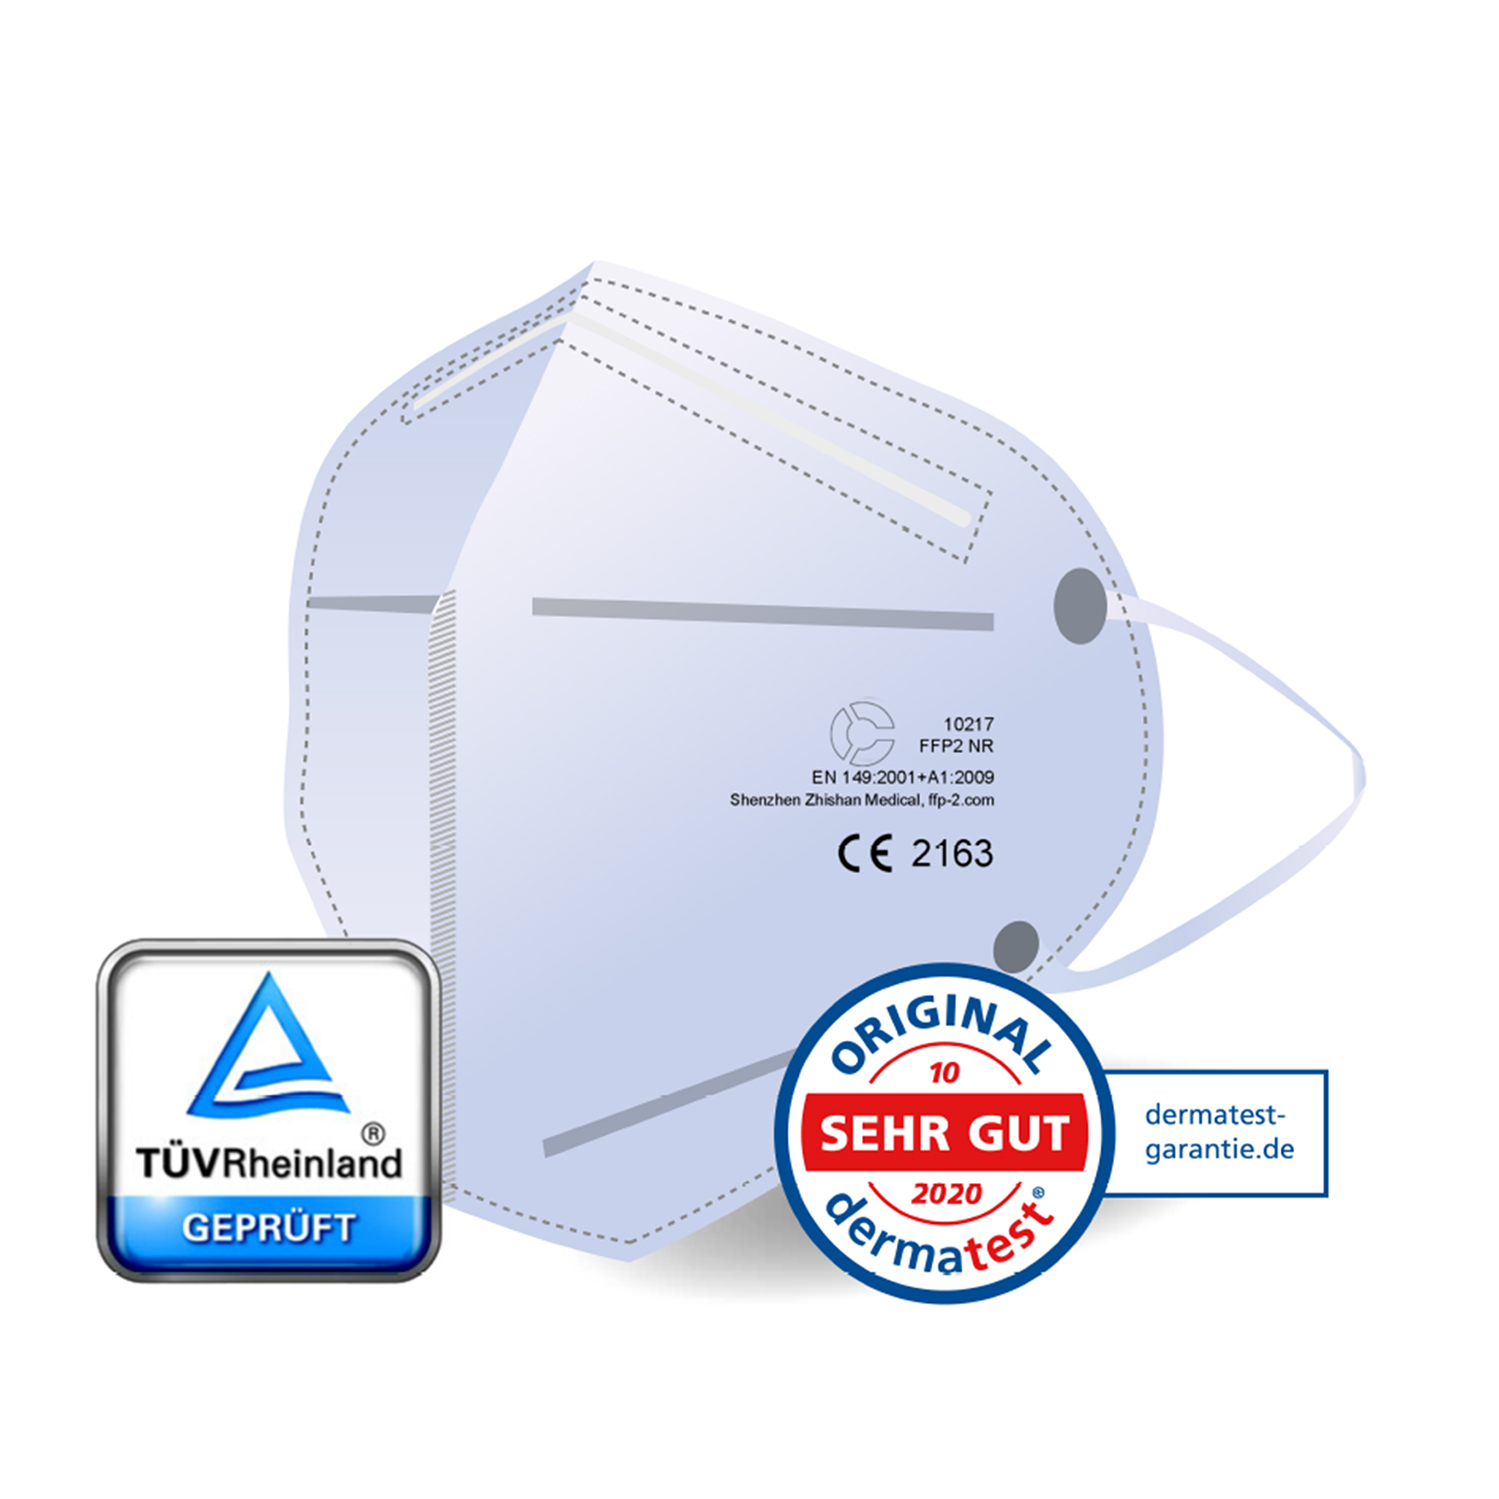 50 Stück air protect Partikelfilternde Halbmaske 10217 FFP2 CE zertifiziert (CE 2163)